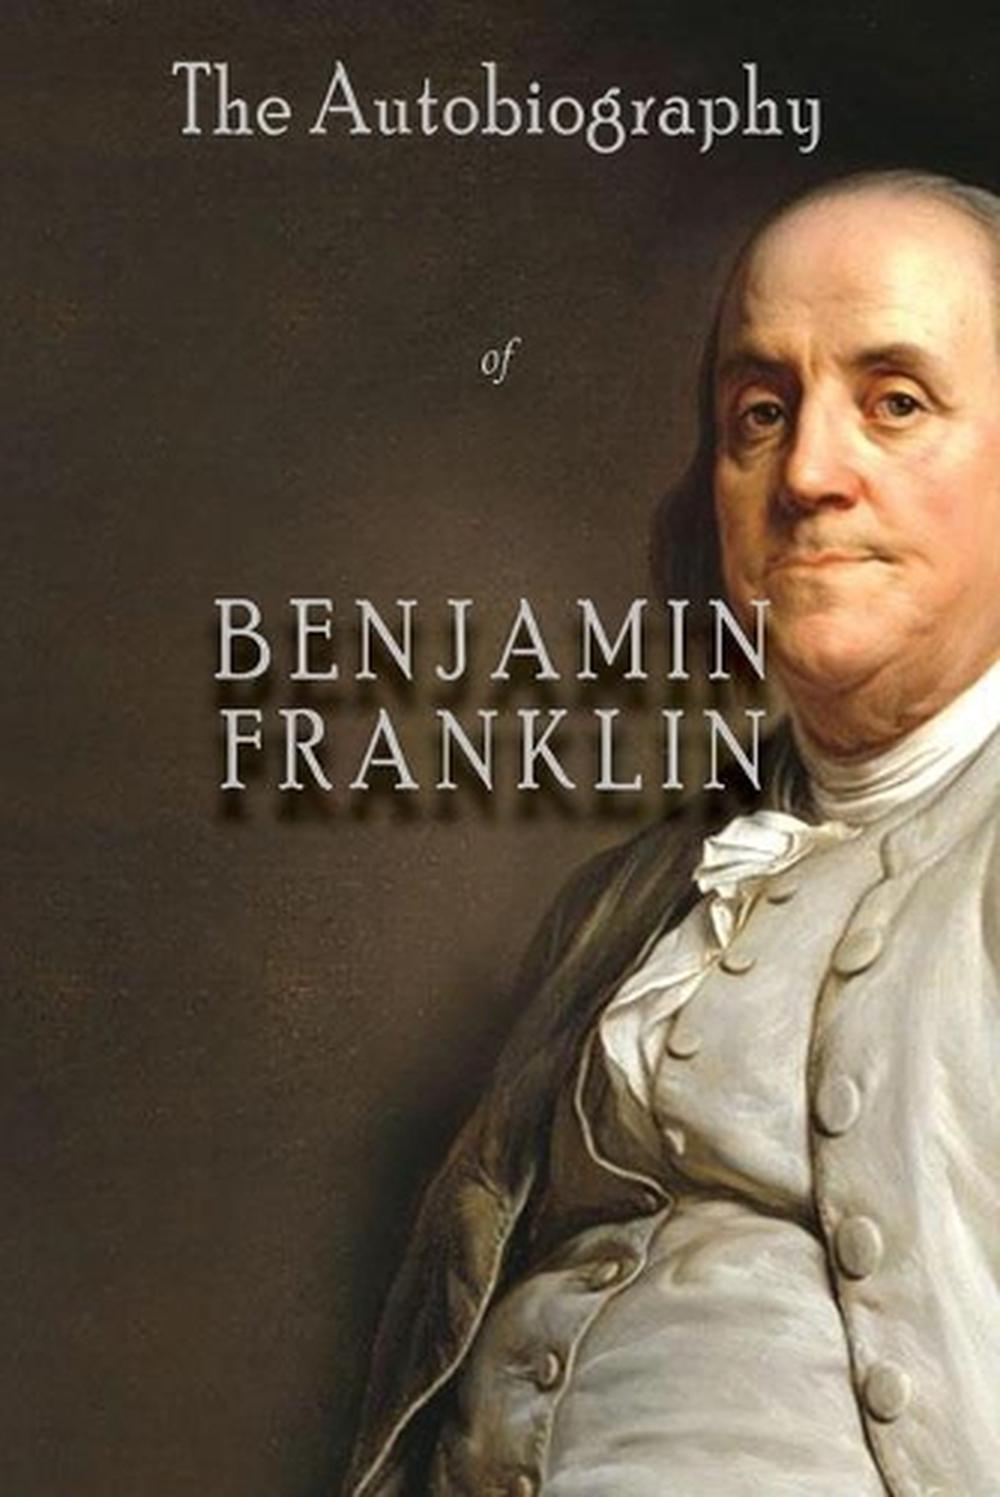 biography of benjamin franklin